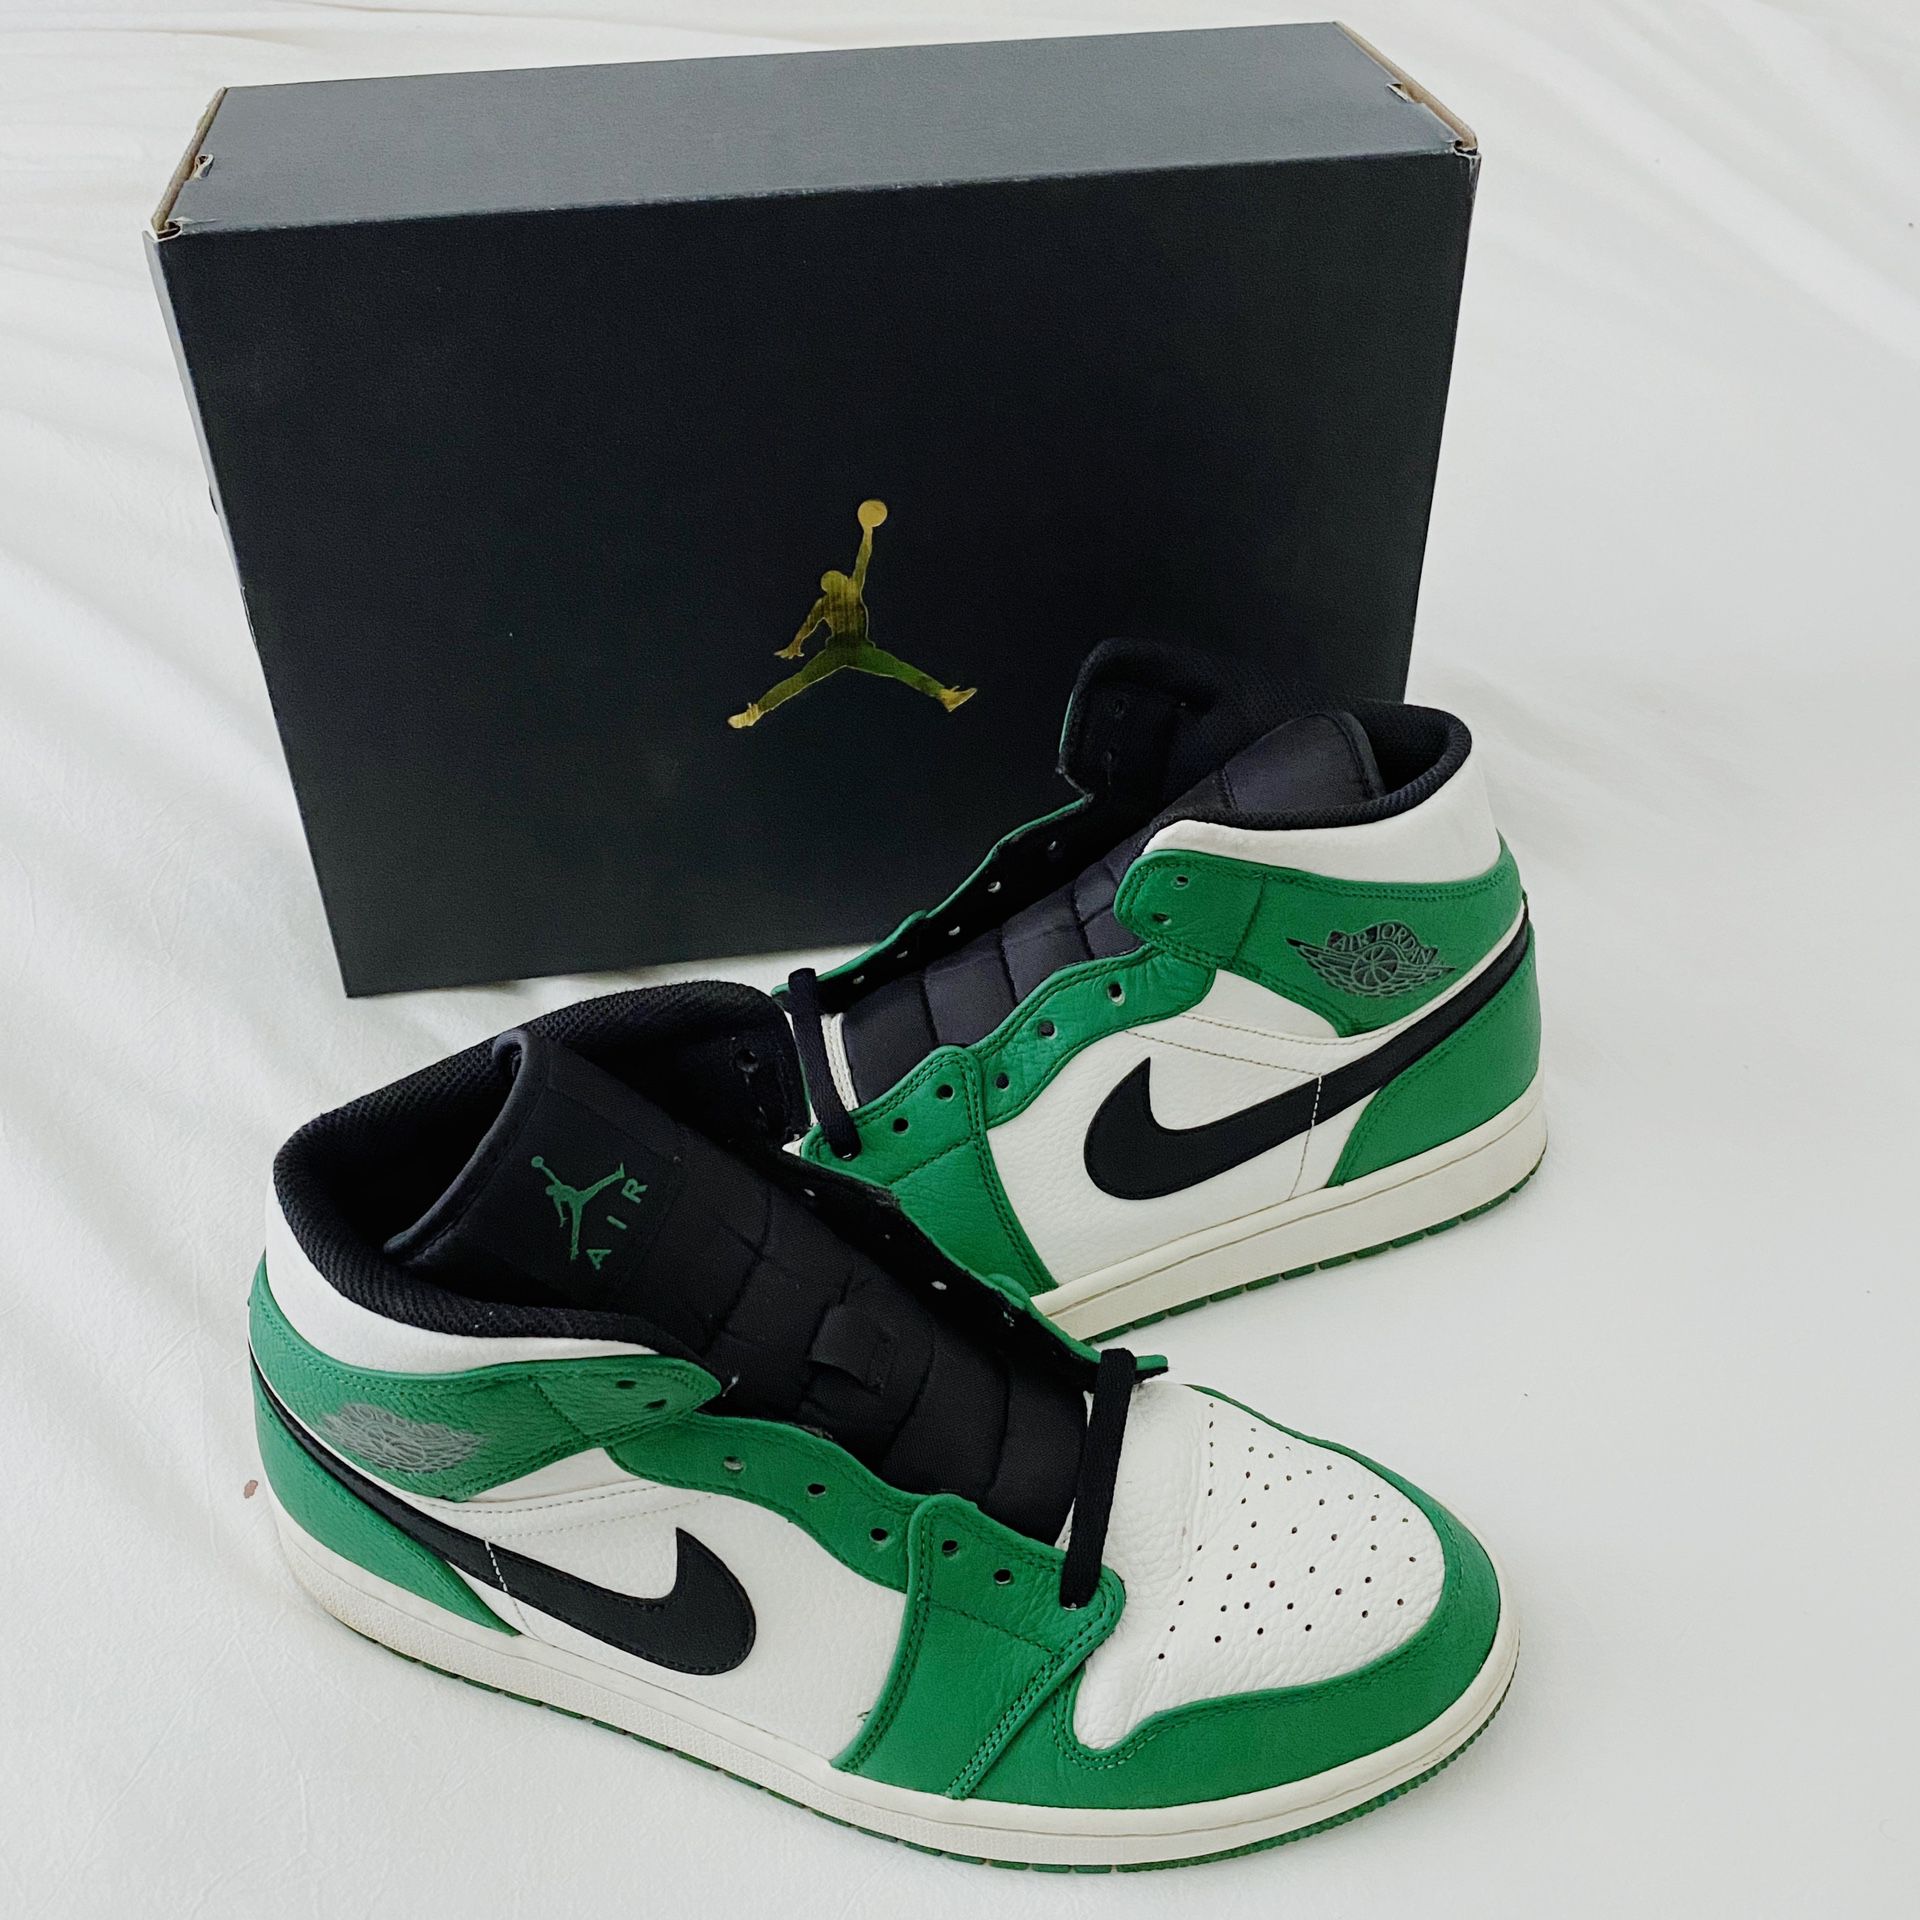 Air Jordan 1 Pine Green Mid Size 11